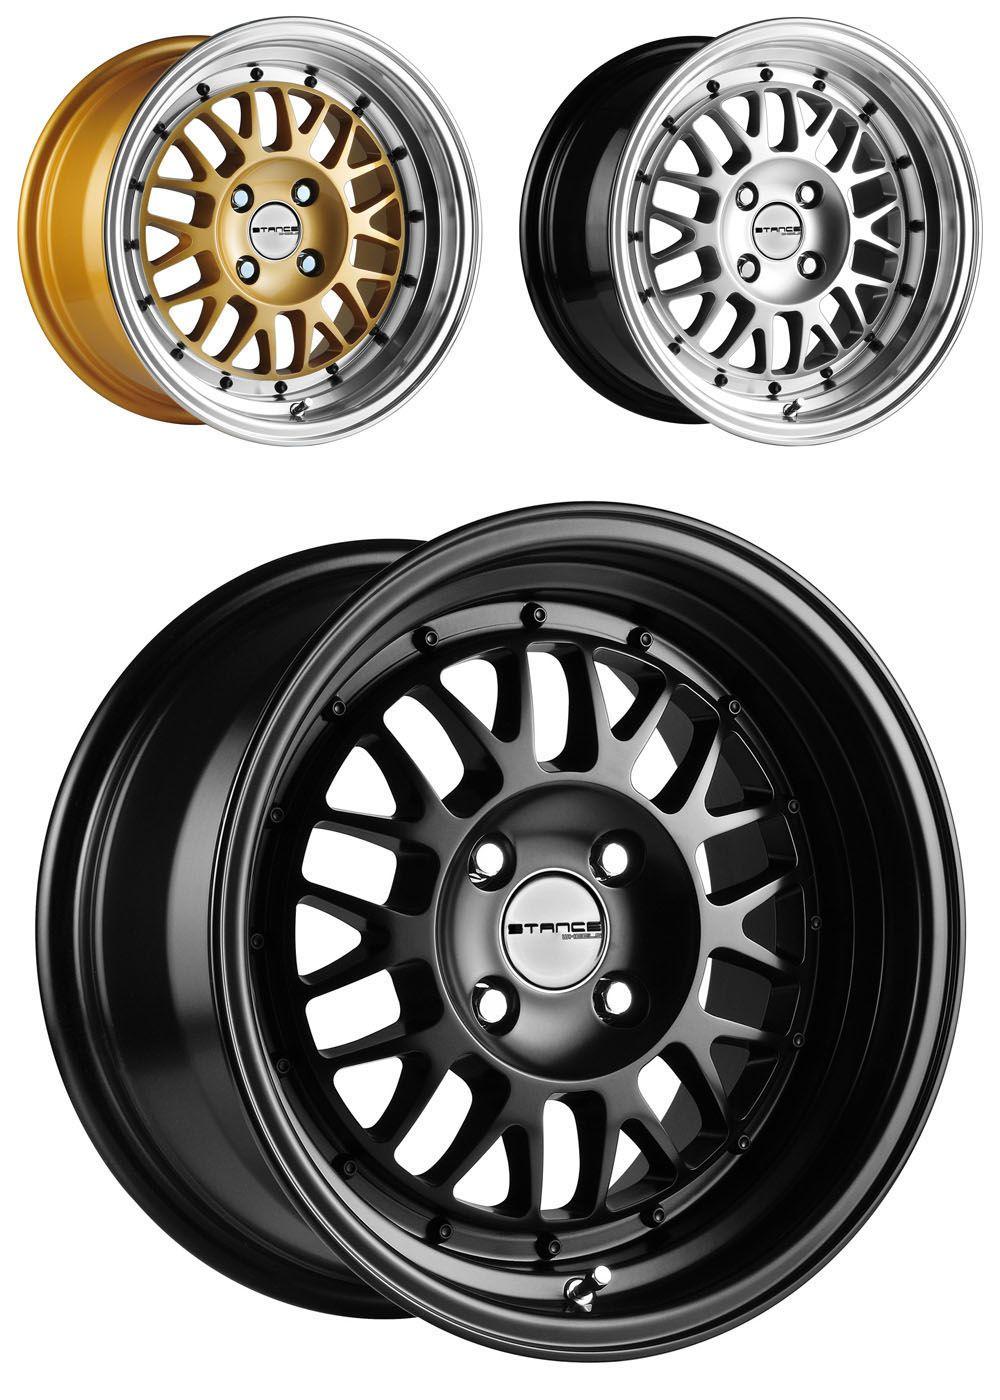 Stance Wheels Logo - FIAT 500 -Stance Mindset Wheel Set (4) 15x8 [Mndset Wheels 15 x 8 ...